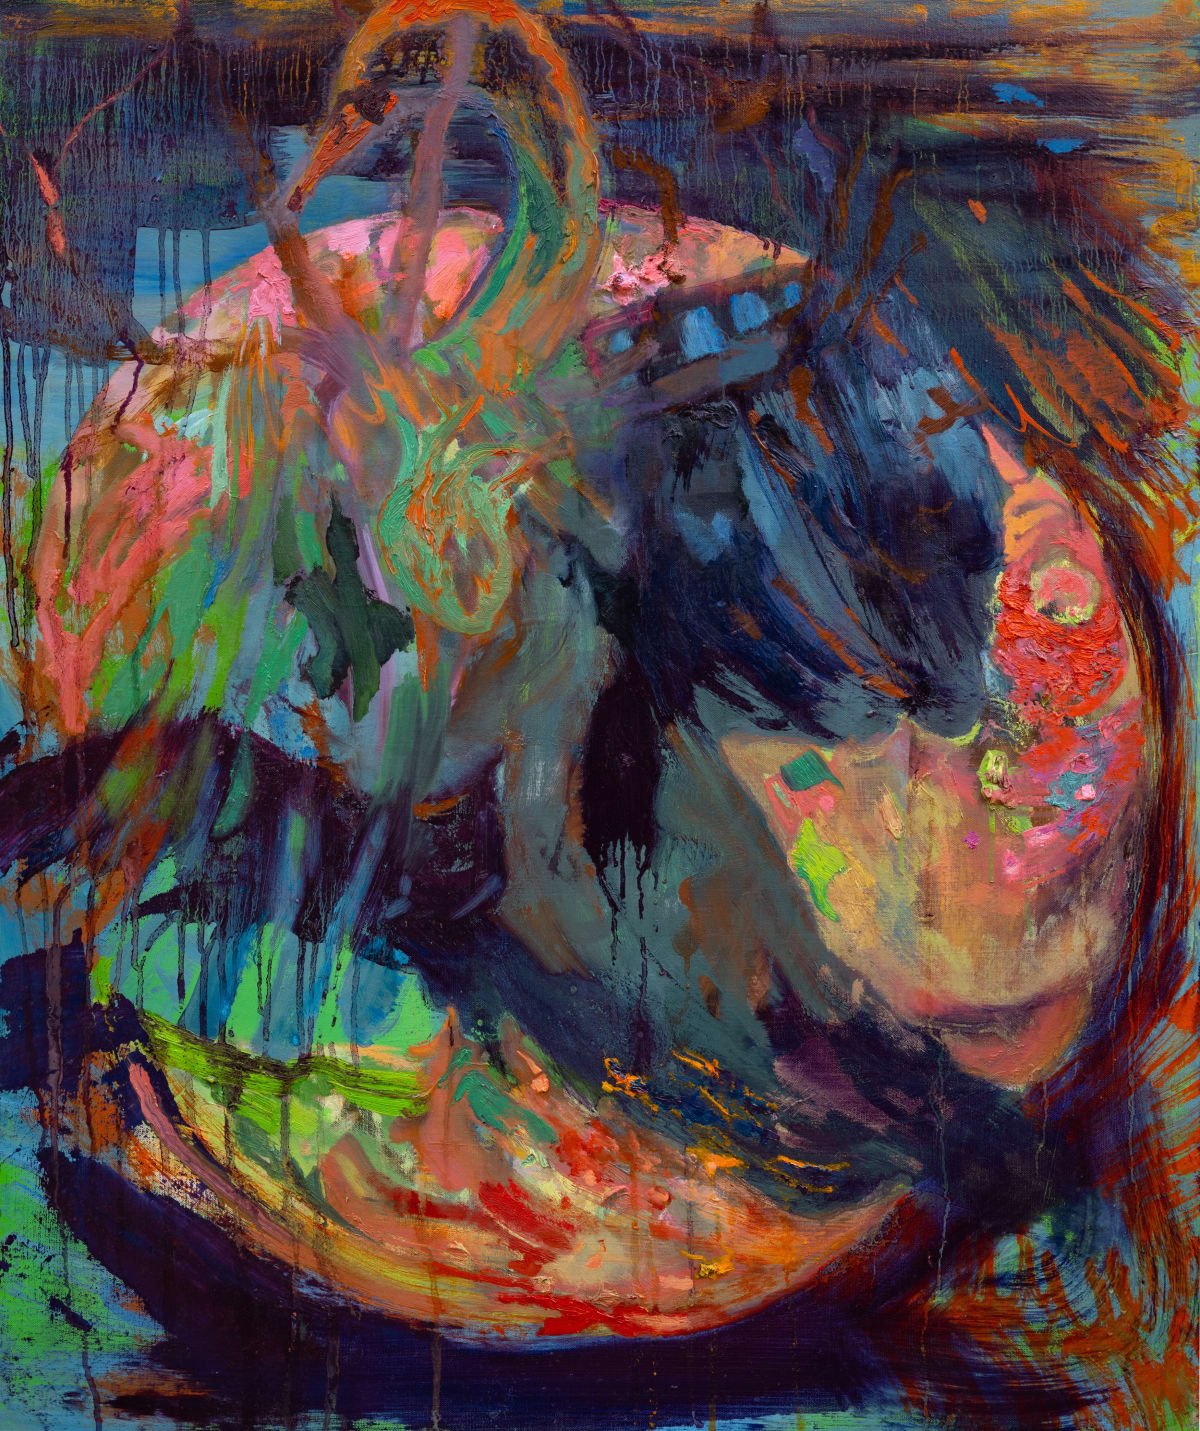 Moss Art - Abstract Series No. 048 (3' x 2')